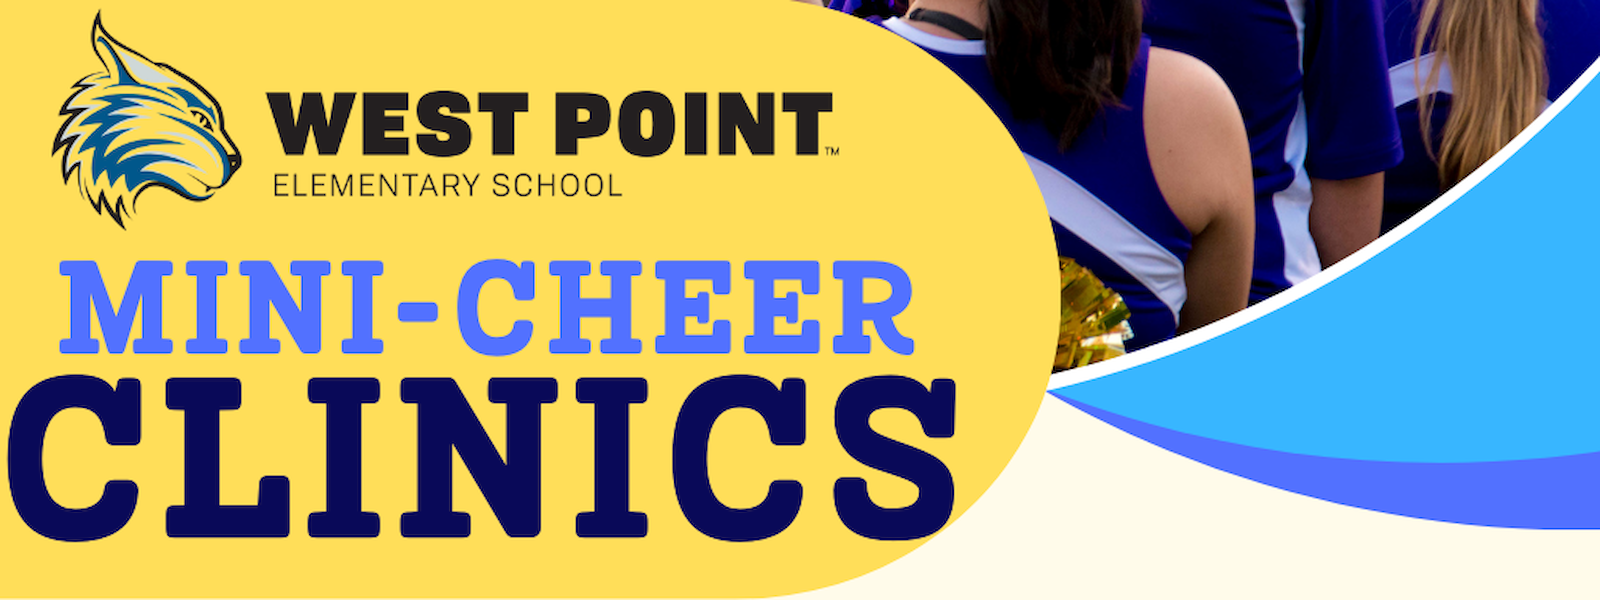 Words Mini-Cheer Clinic with cheerleaders